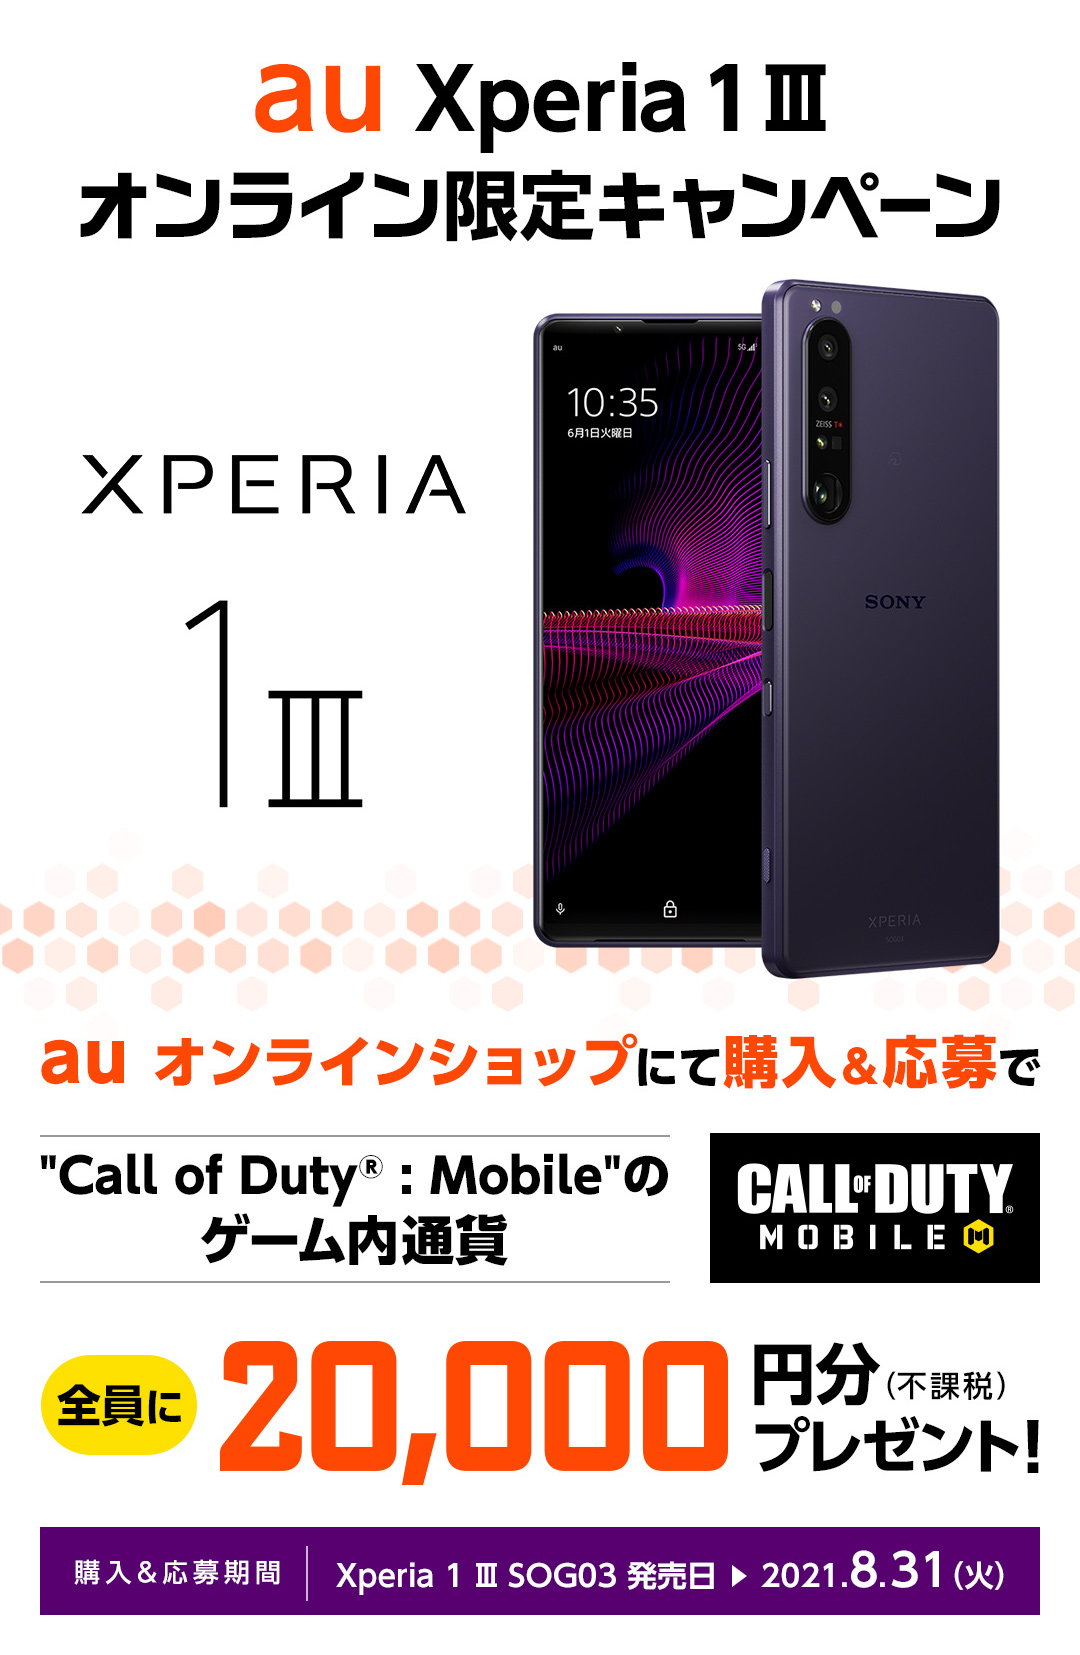 Xperia 1 III オンライン限定キャンペーン